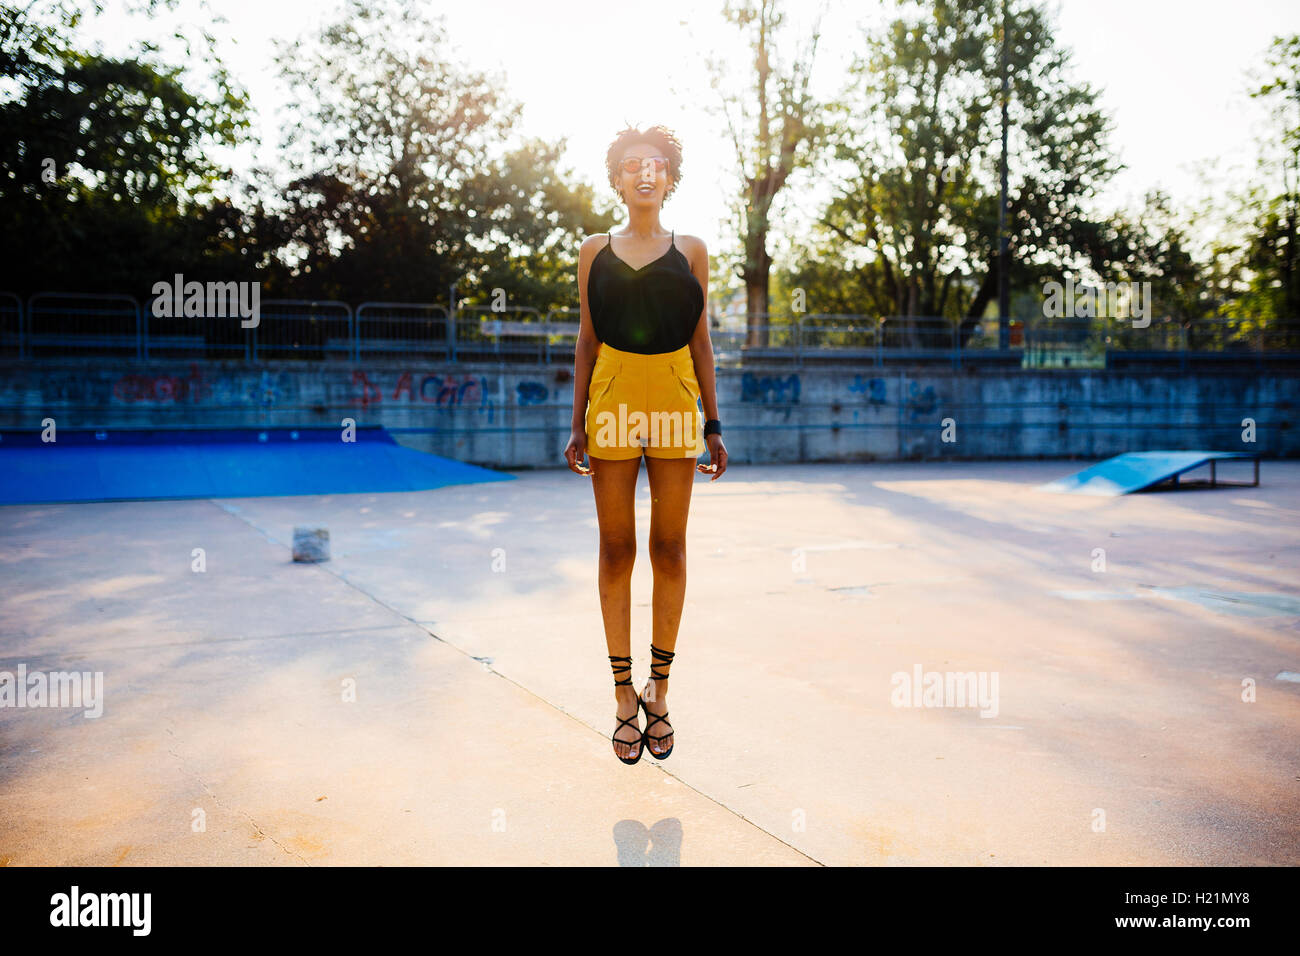 Junge Frau springt in die Luft in einem skatepark Stockfoto